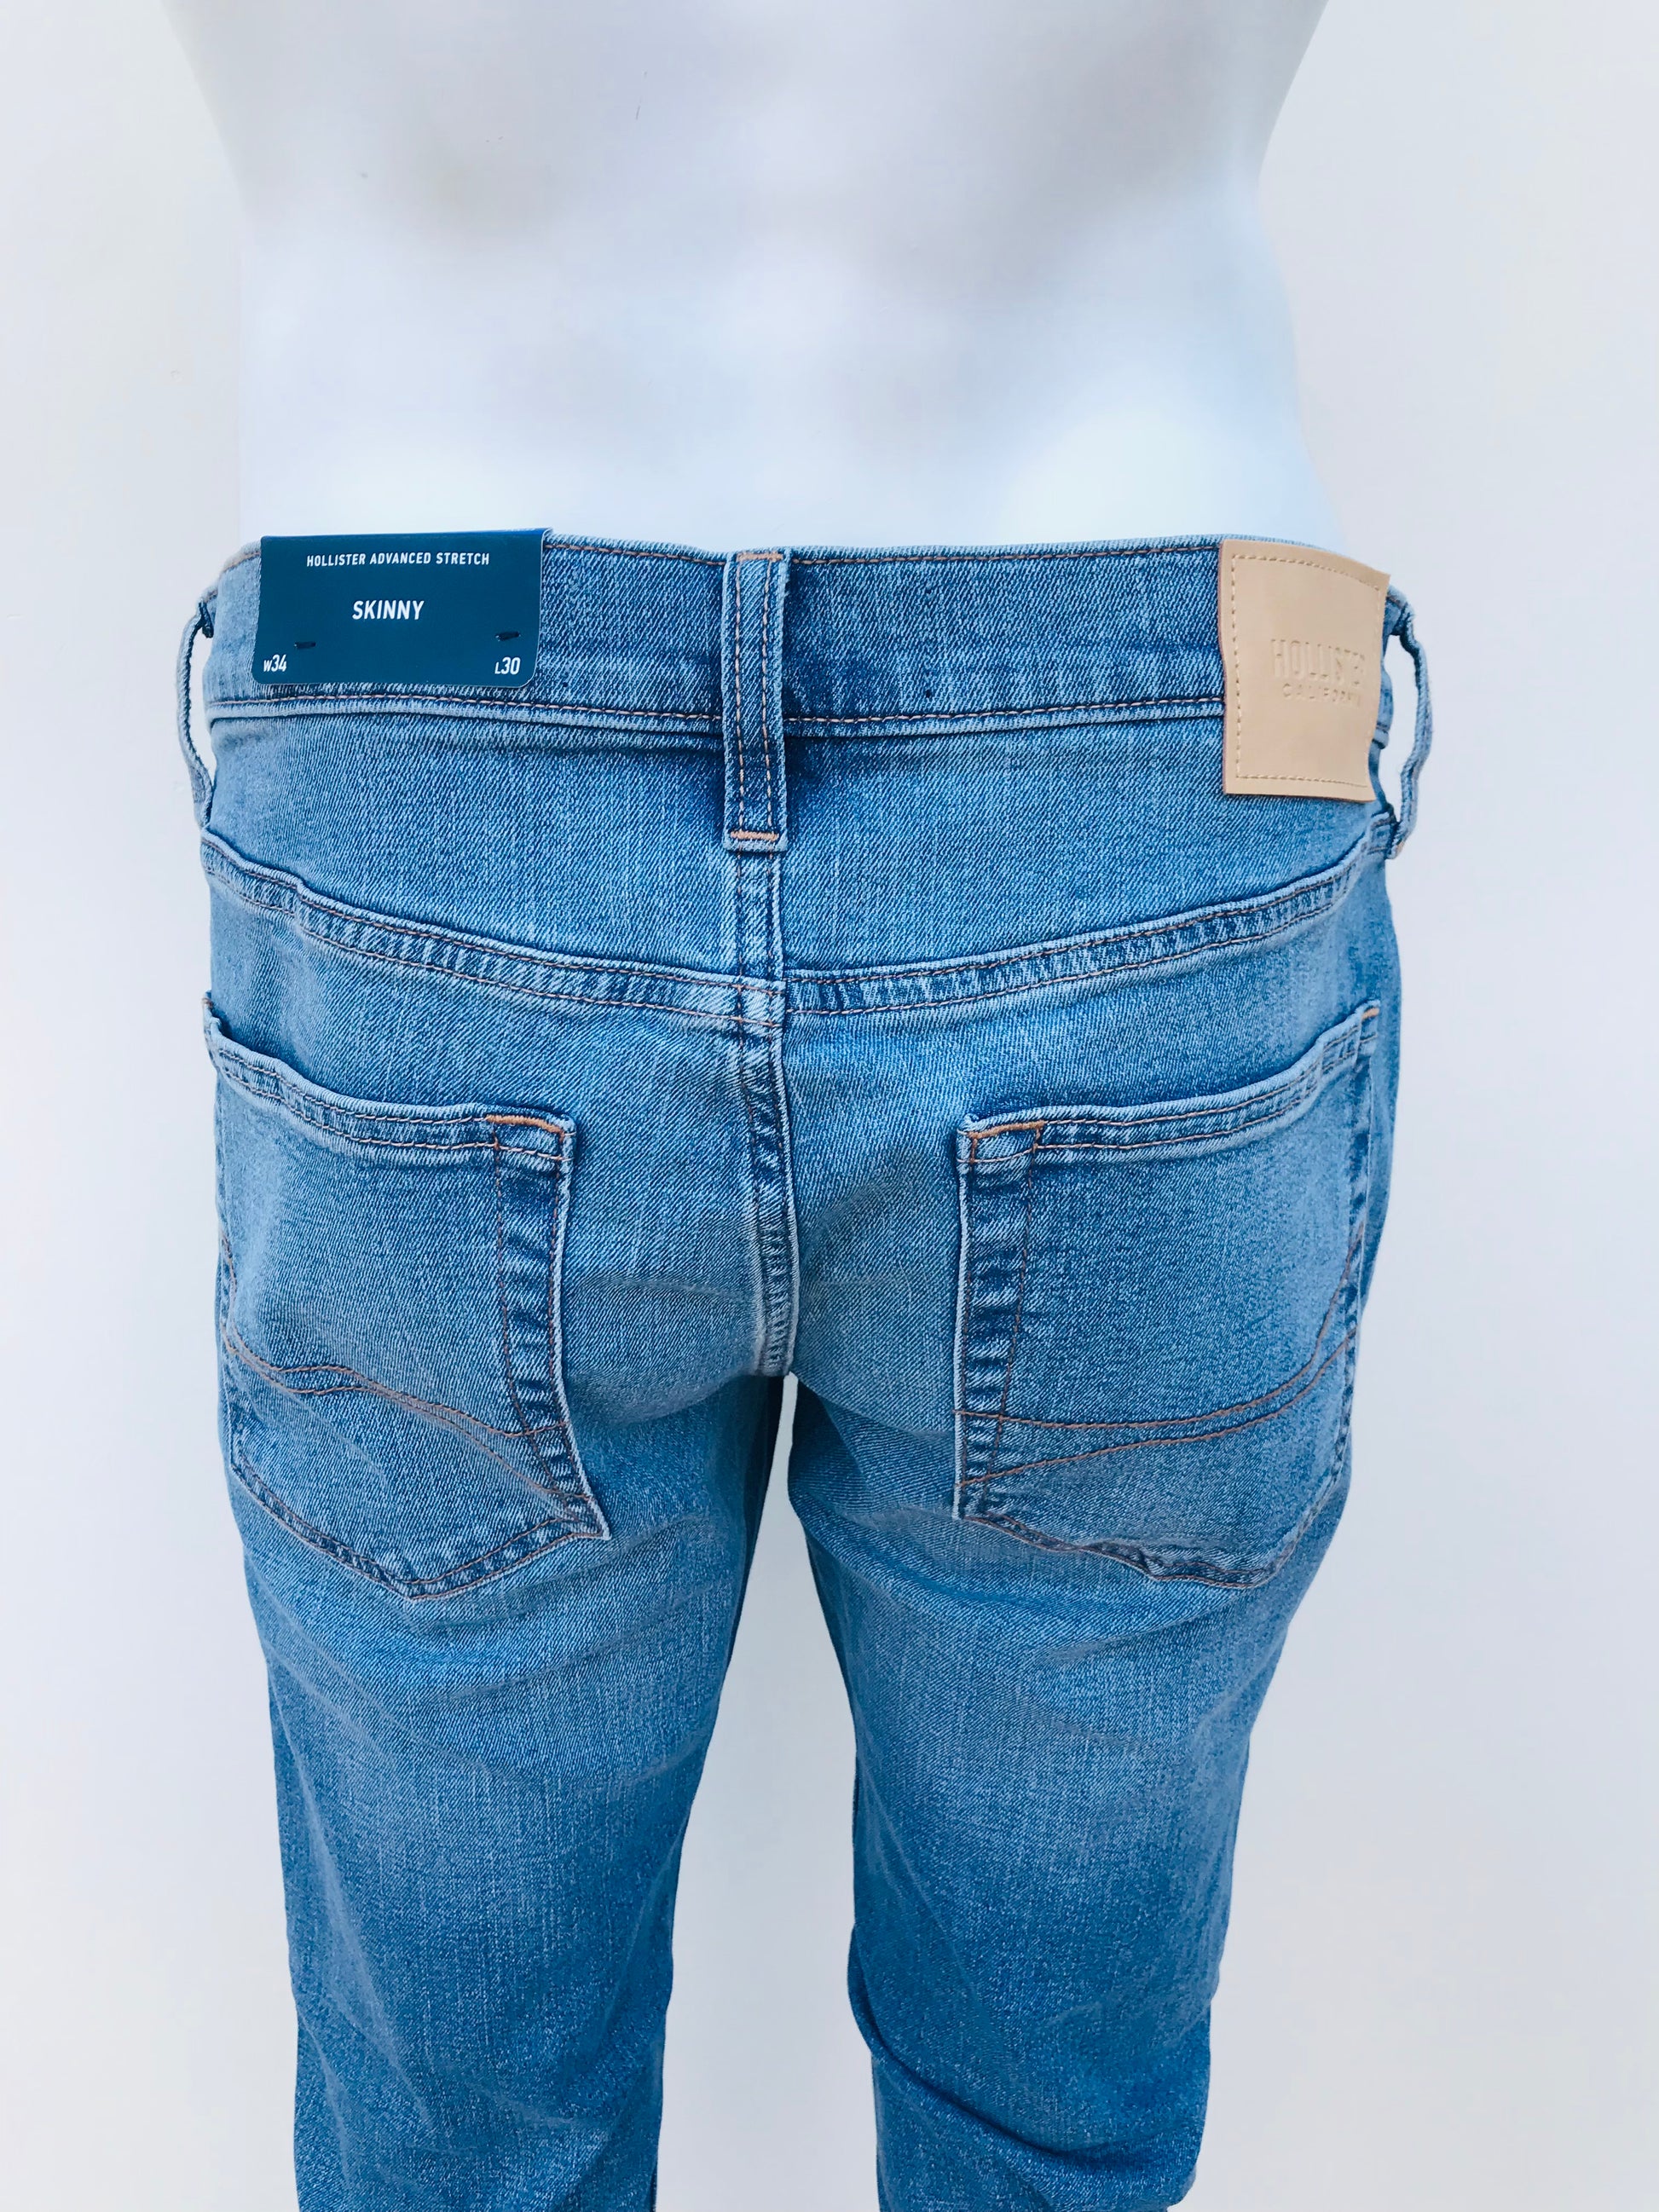 Pantalon jeans HOLLISTER original, HIGHEST- RISE VINTAGE BAGGY , azul